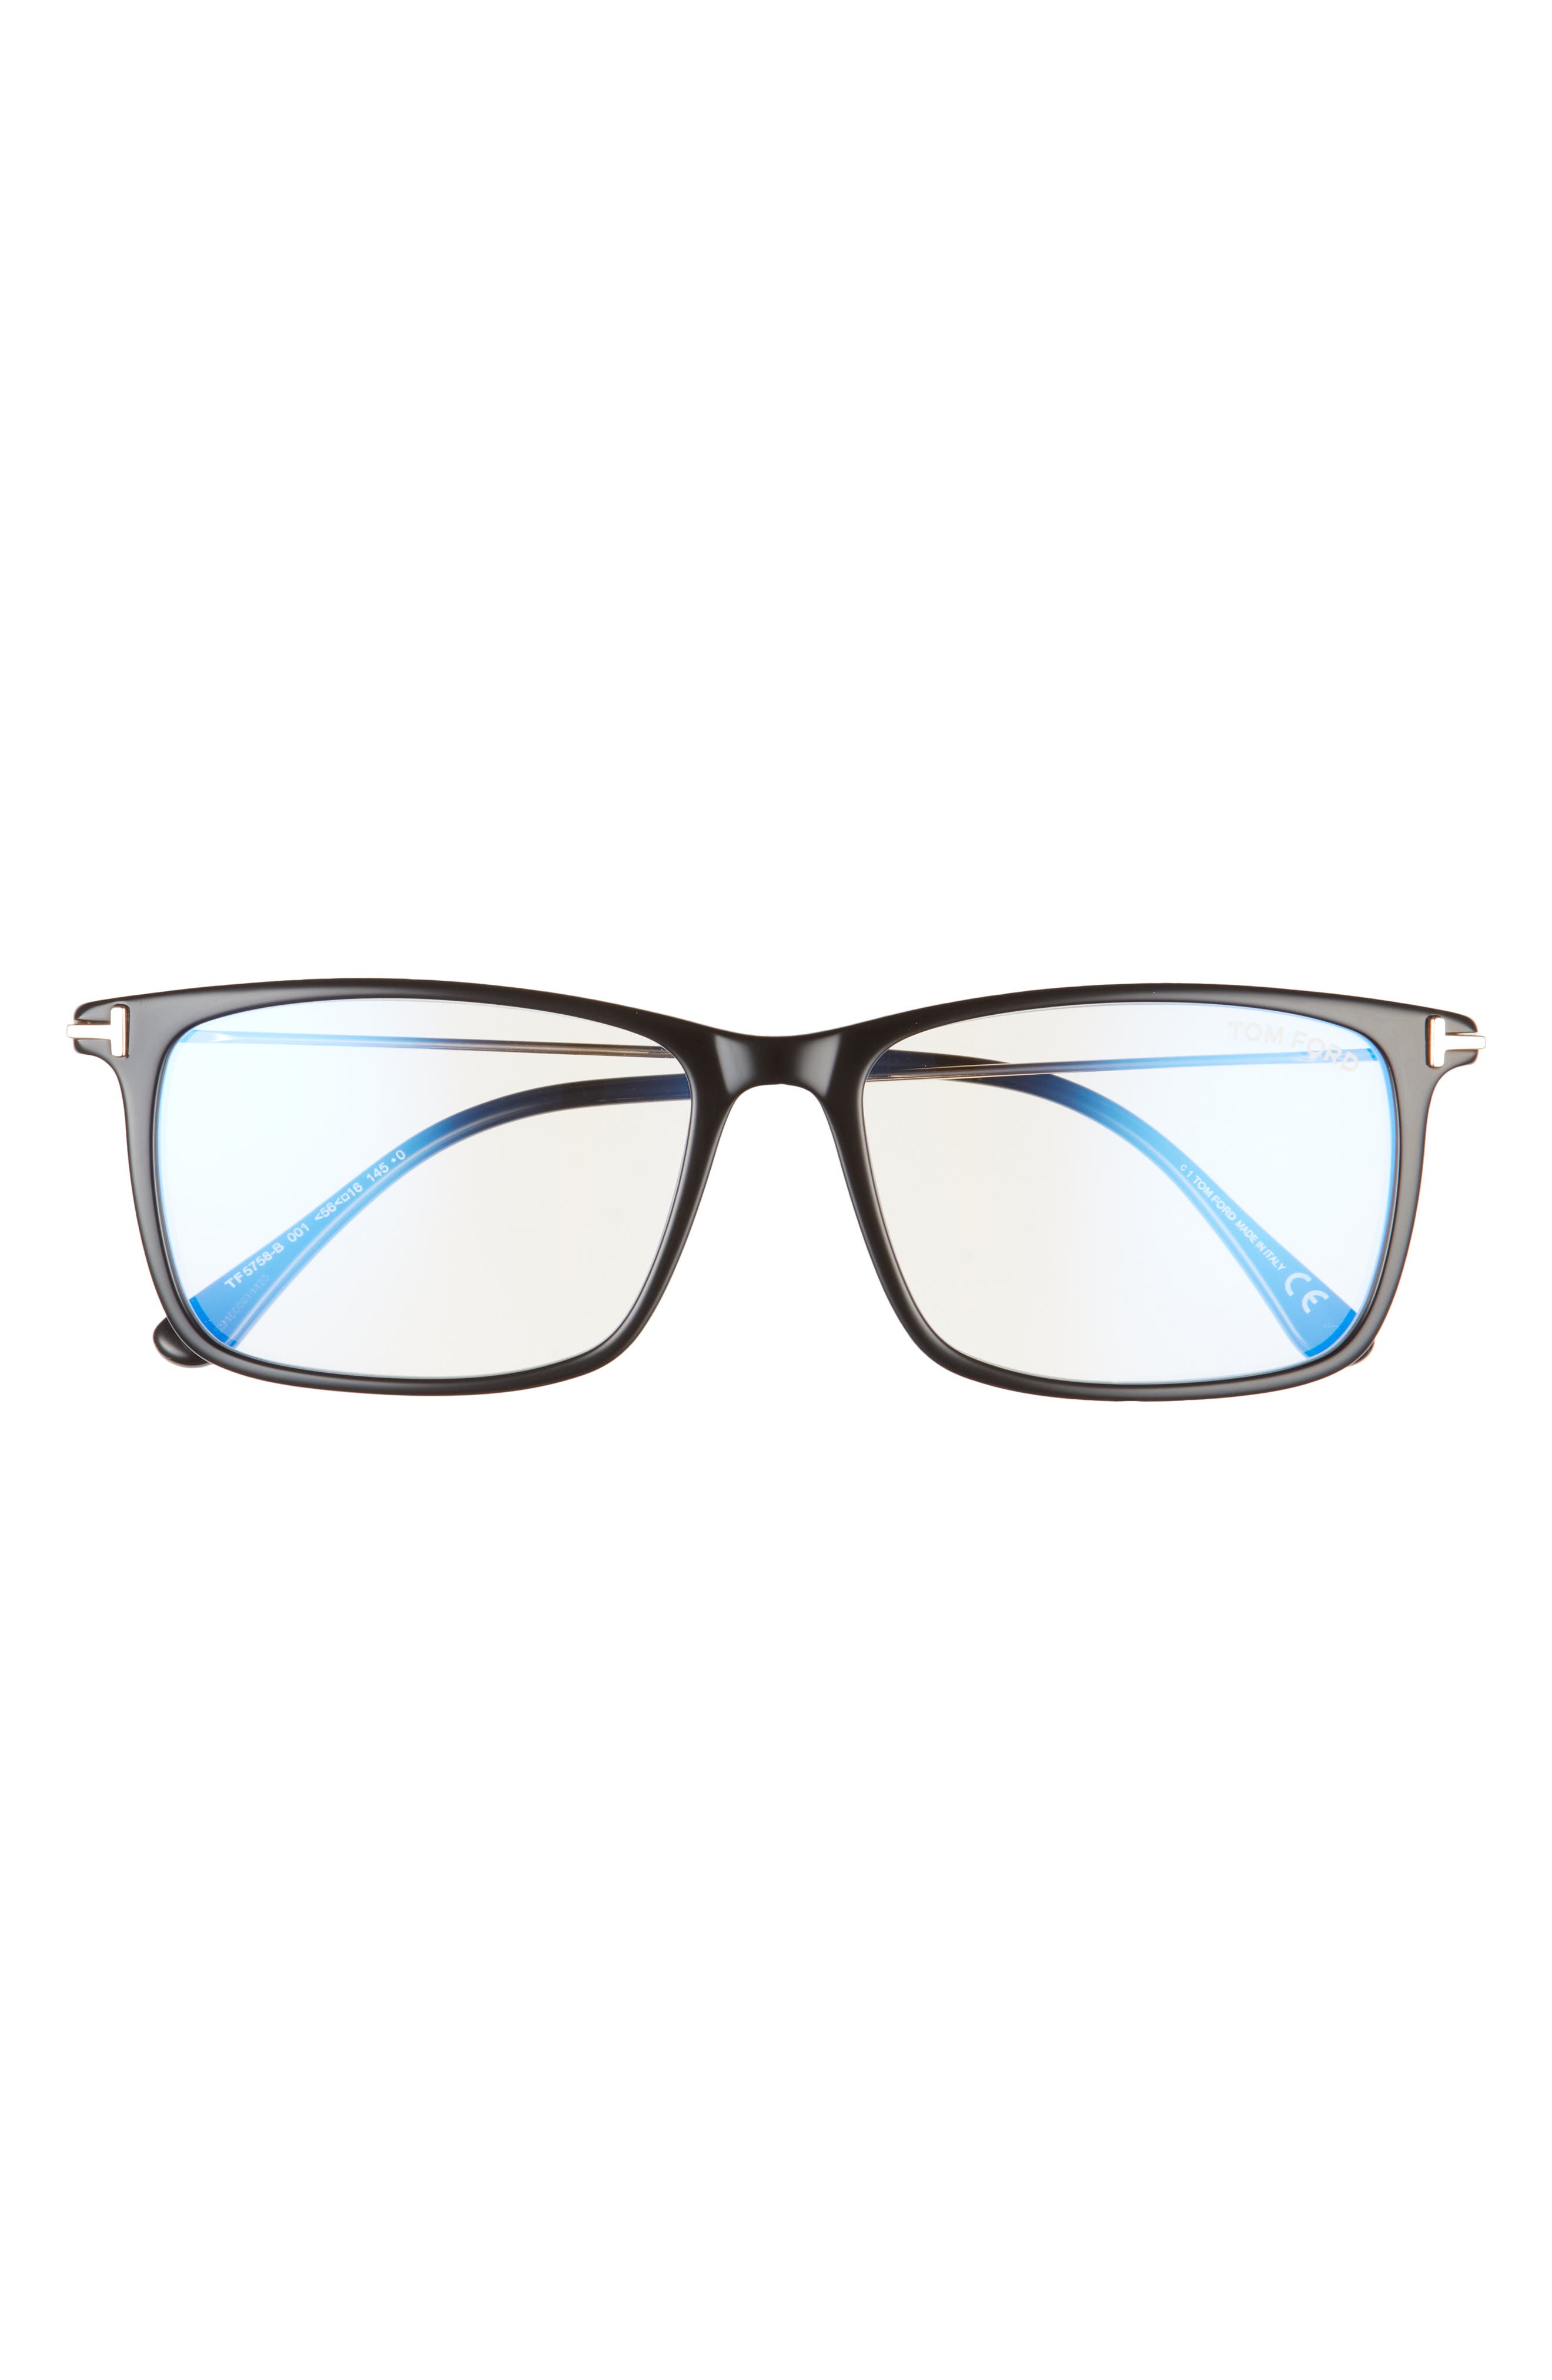 TOM FORD 56mm Rectangular Blue Light Blocking Reading Glasses in Shiny  Black Dark Ruthen | Smart Closet